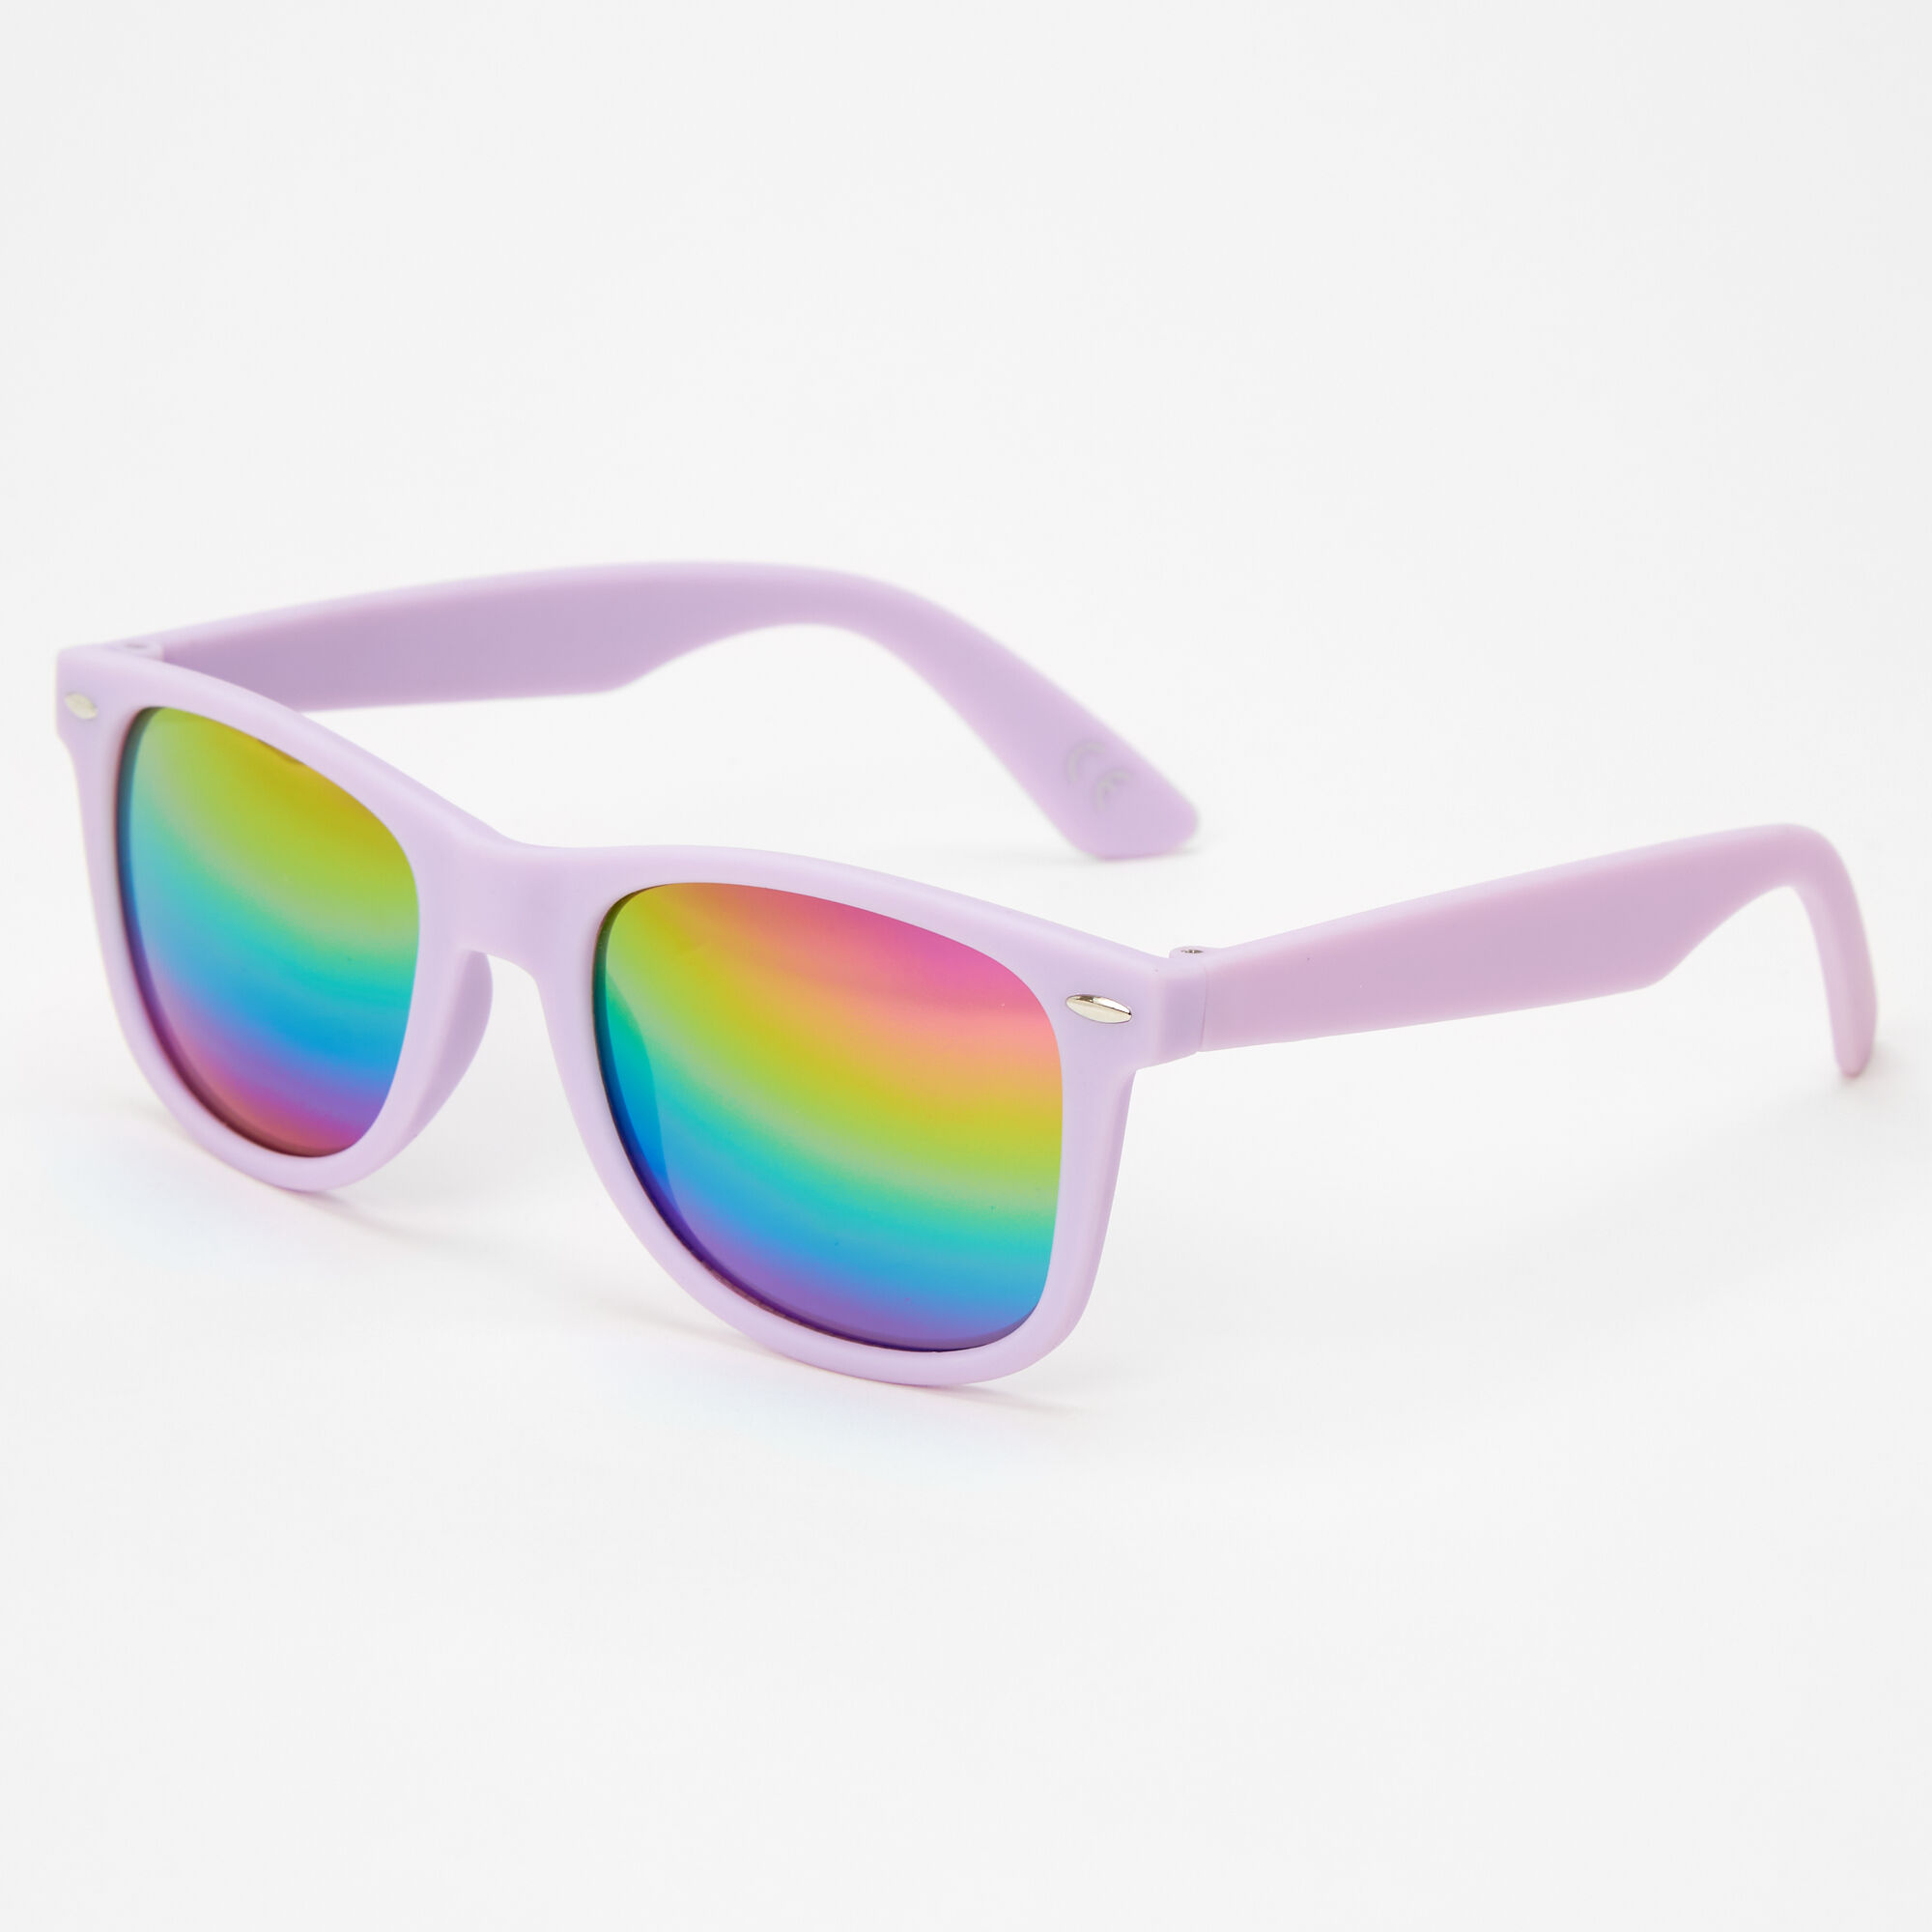 View Claires Retro Sunglasses Lavender Rainbow information